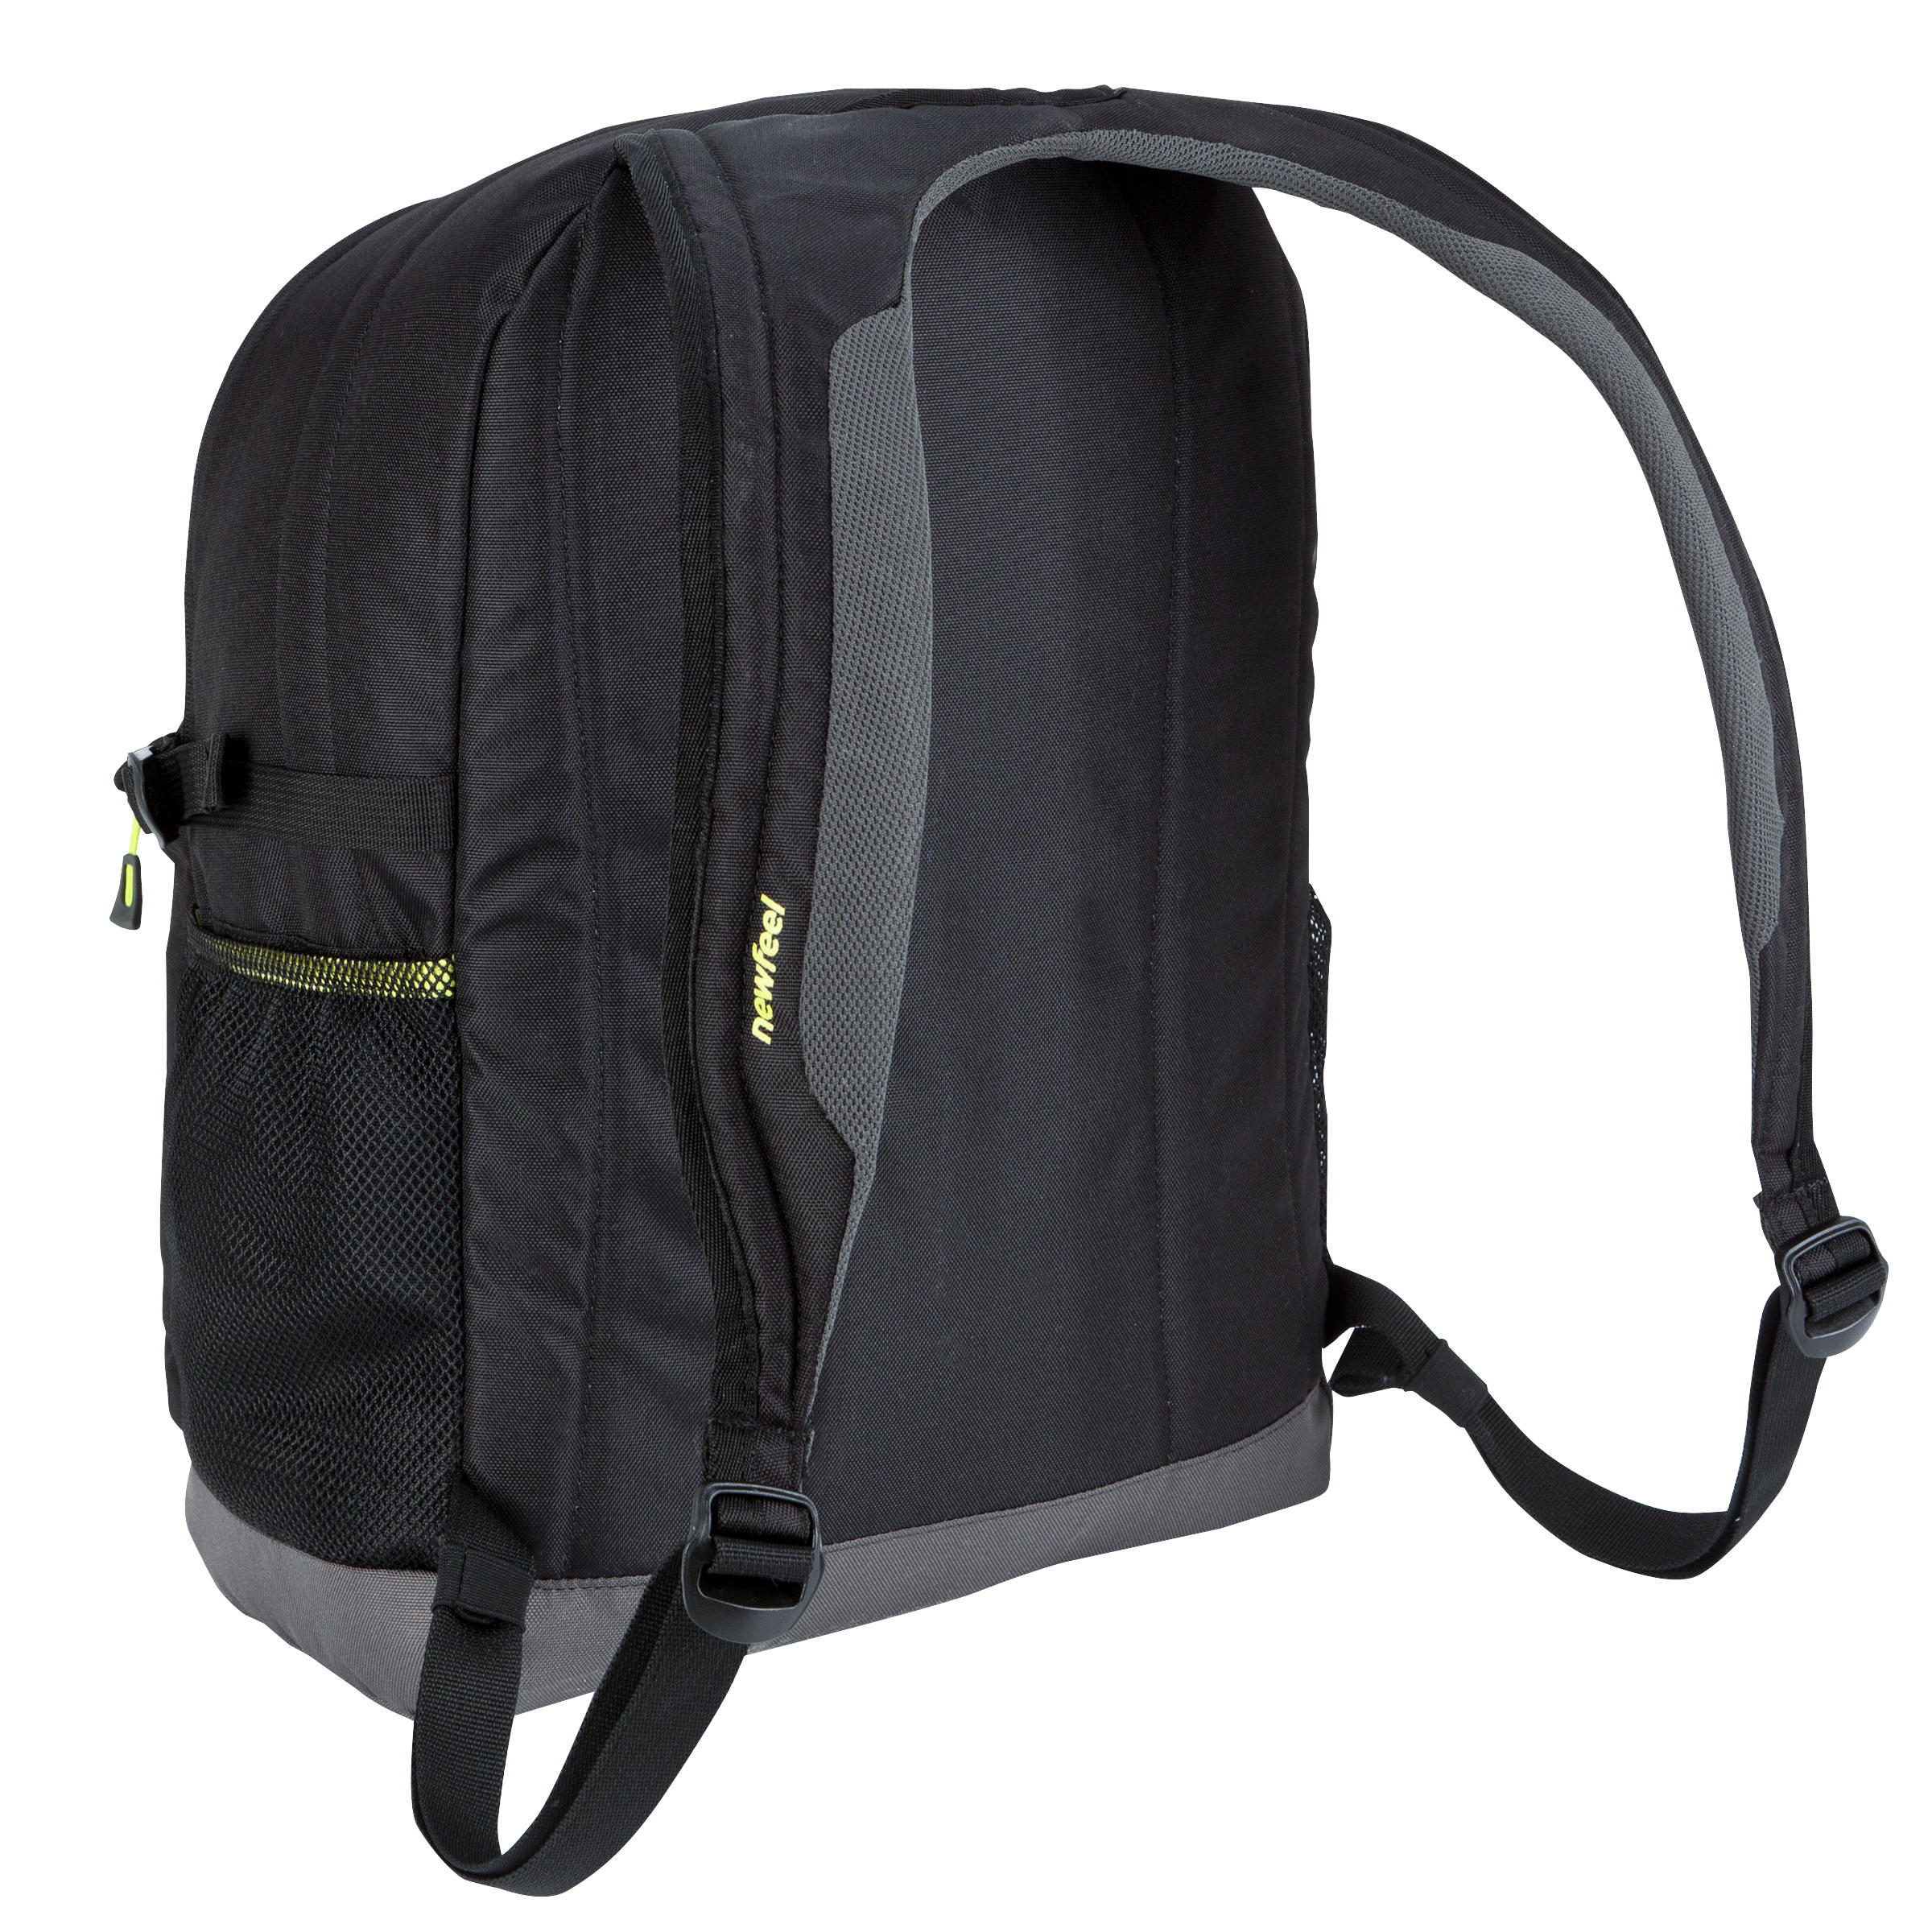 Newfeel Black Backpack - Buy Newfeel Black Backpack Online at Low Price -  Snapdeal